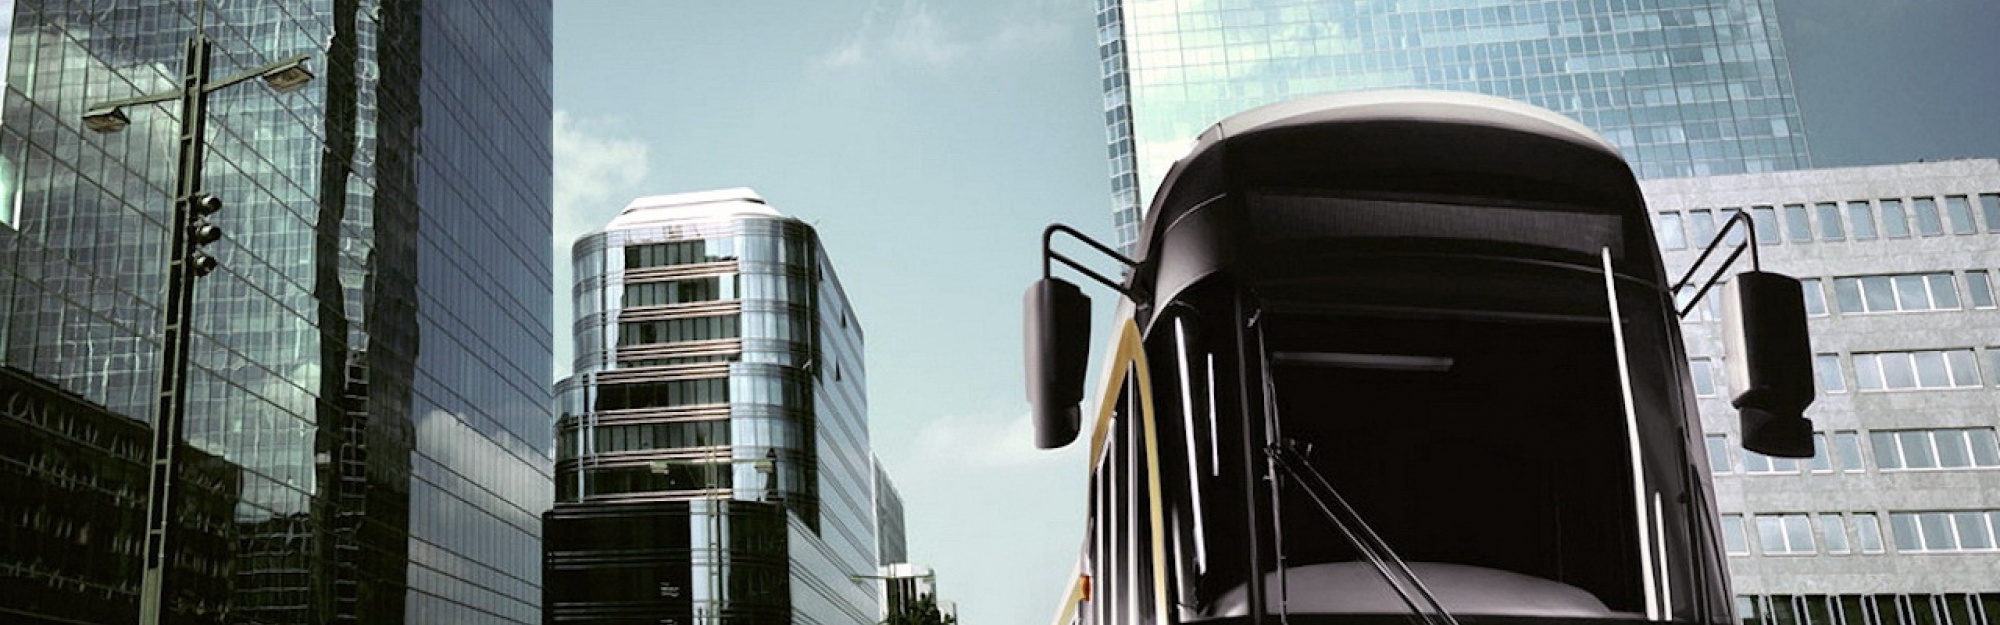 Modern Tram In The City